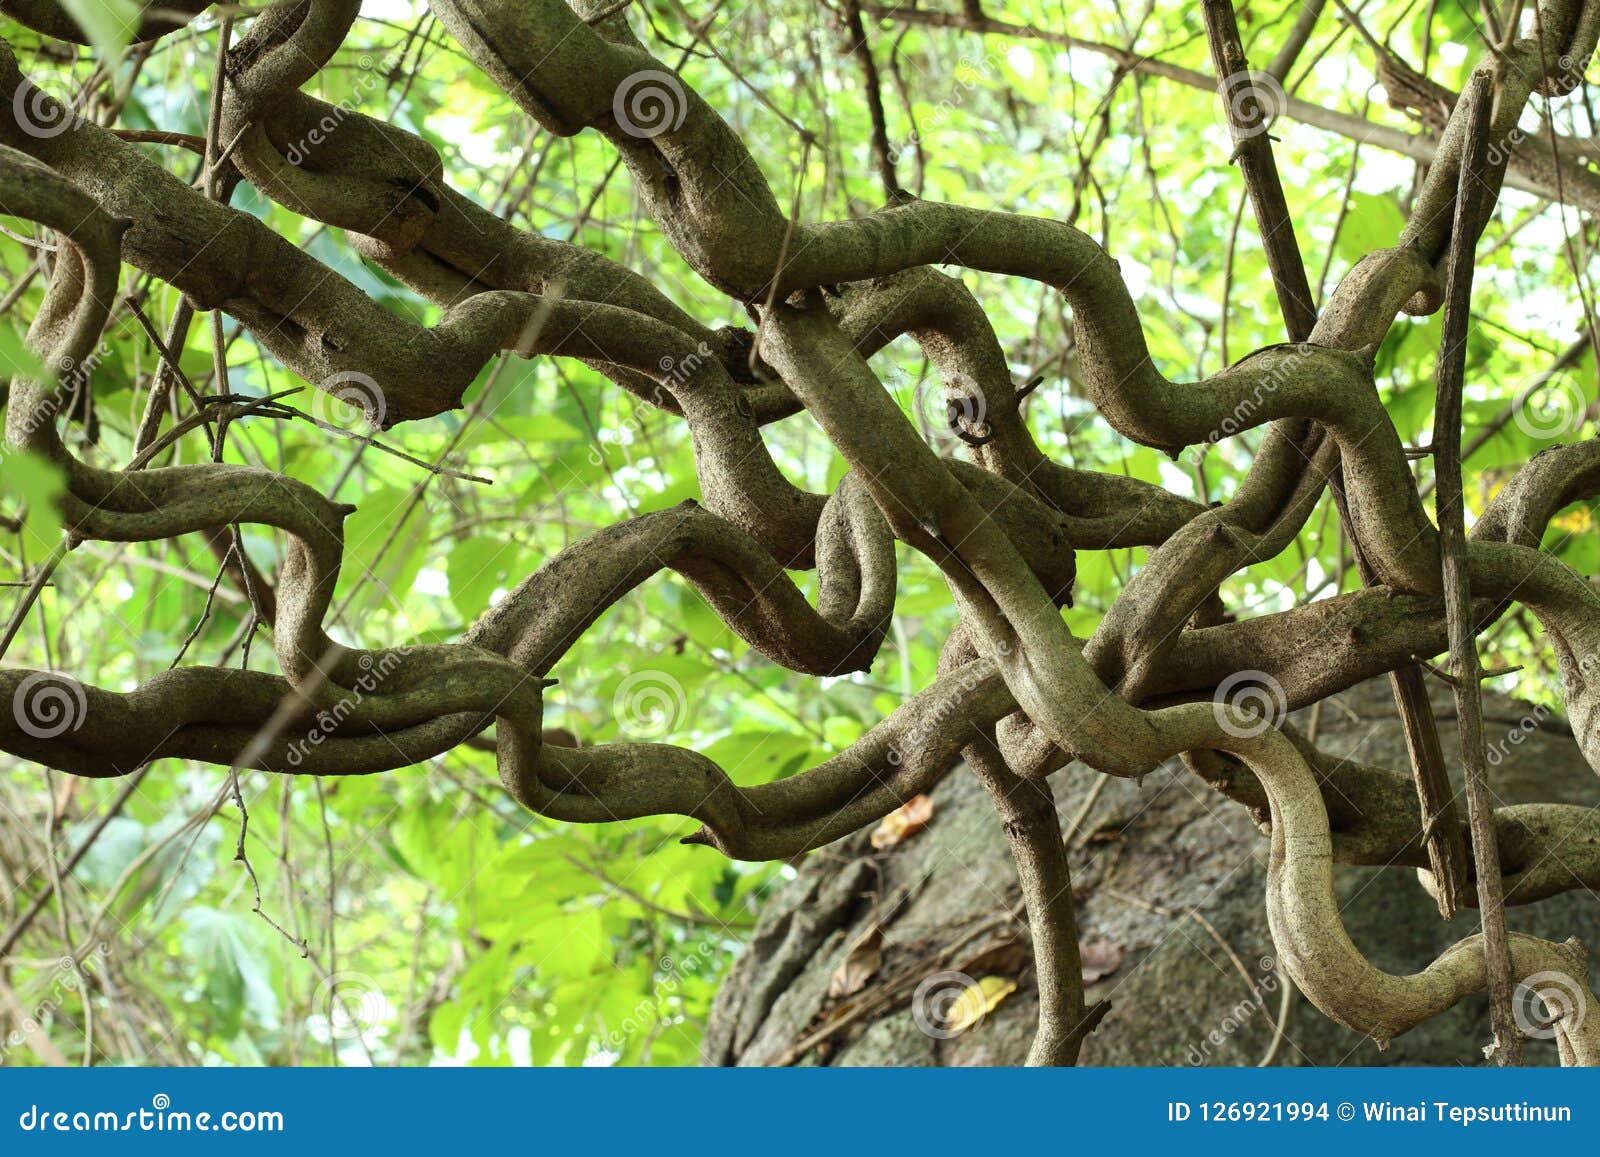 liana or jungle vines